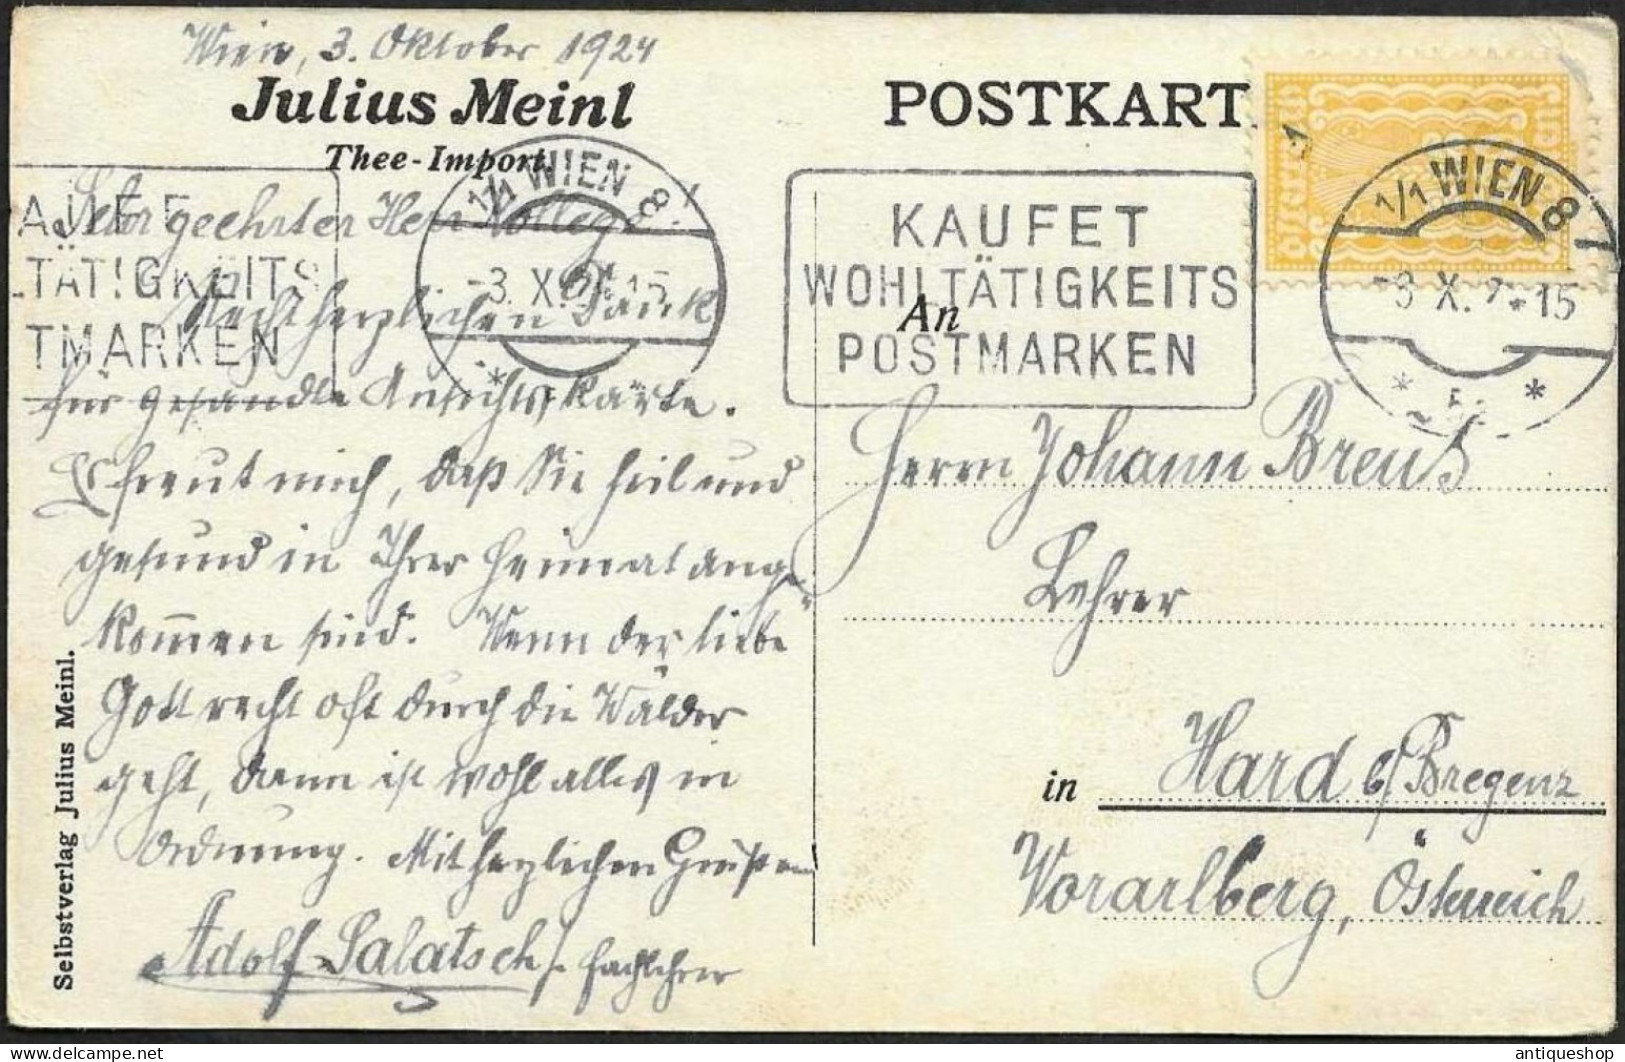 Julius Meinl (Thee Import)------old Postcard - Advertising